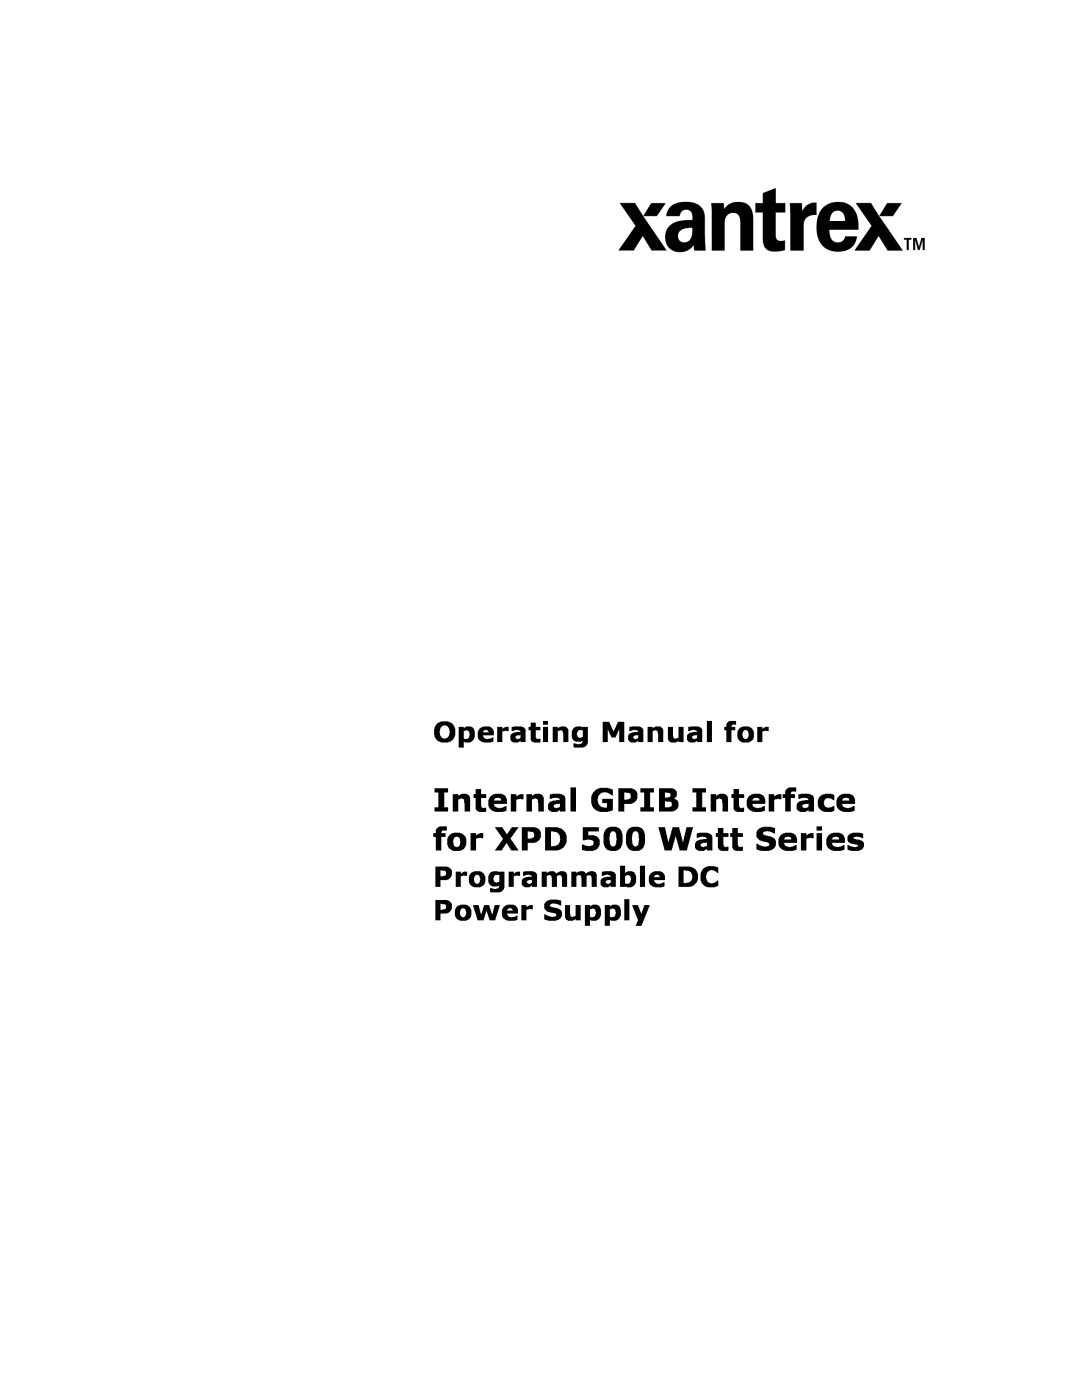 Xantrex Technology GPIB-XPD manual Internal GPIB Interface for XPD 500 Watt Series, Operating Manual for 